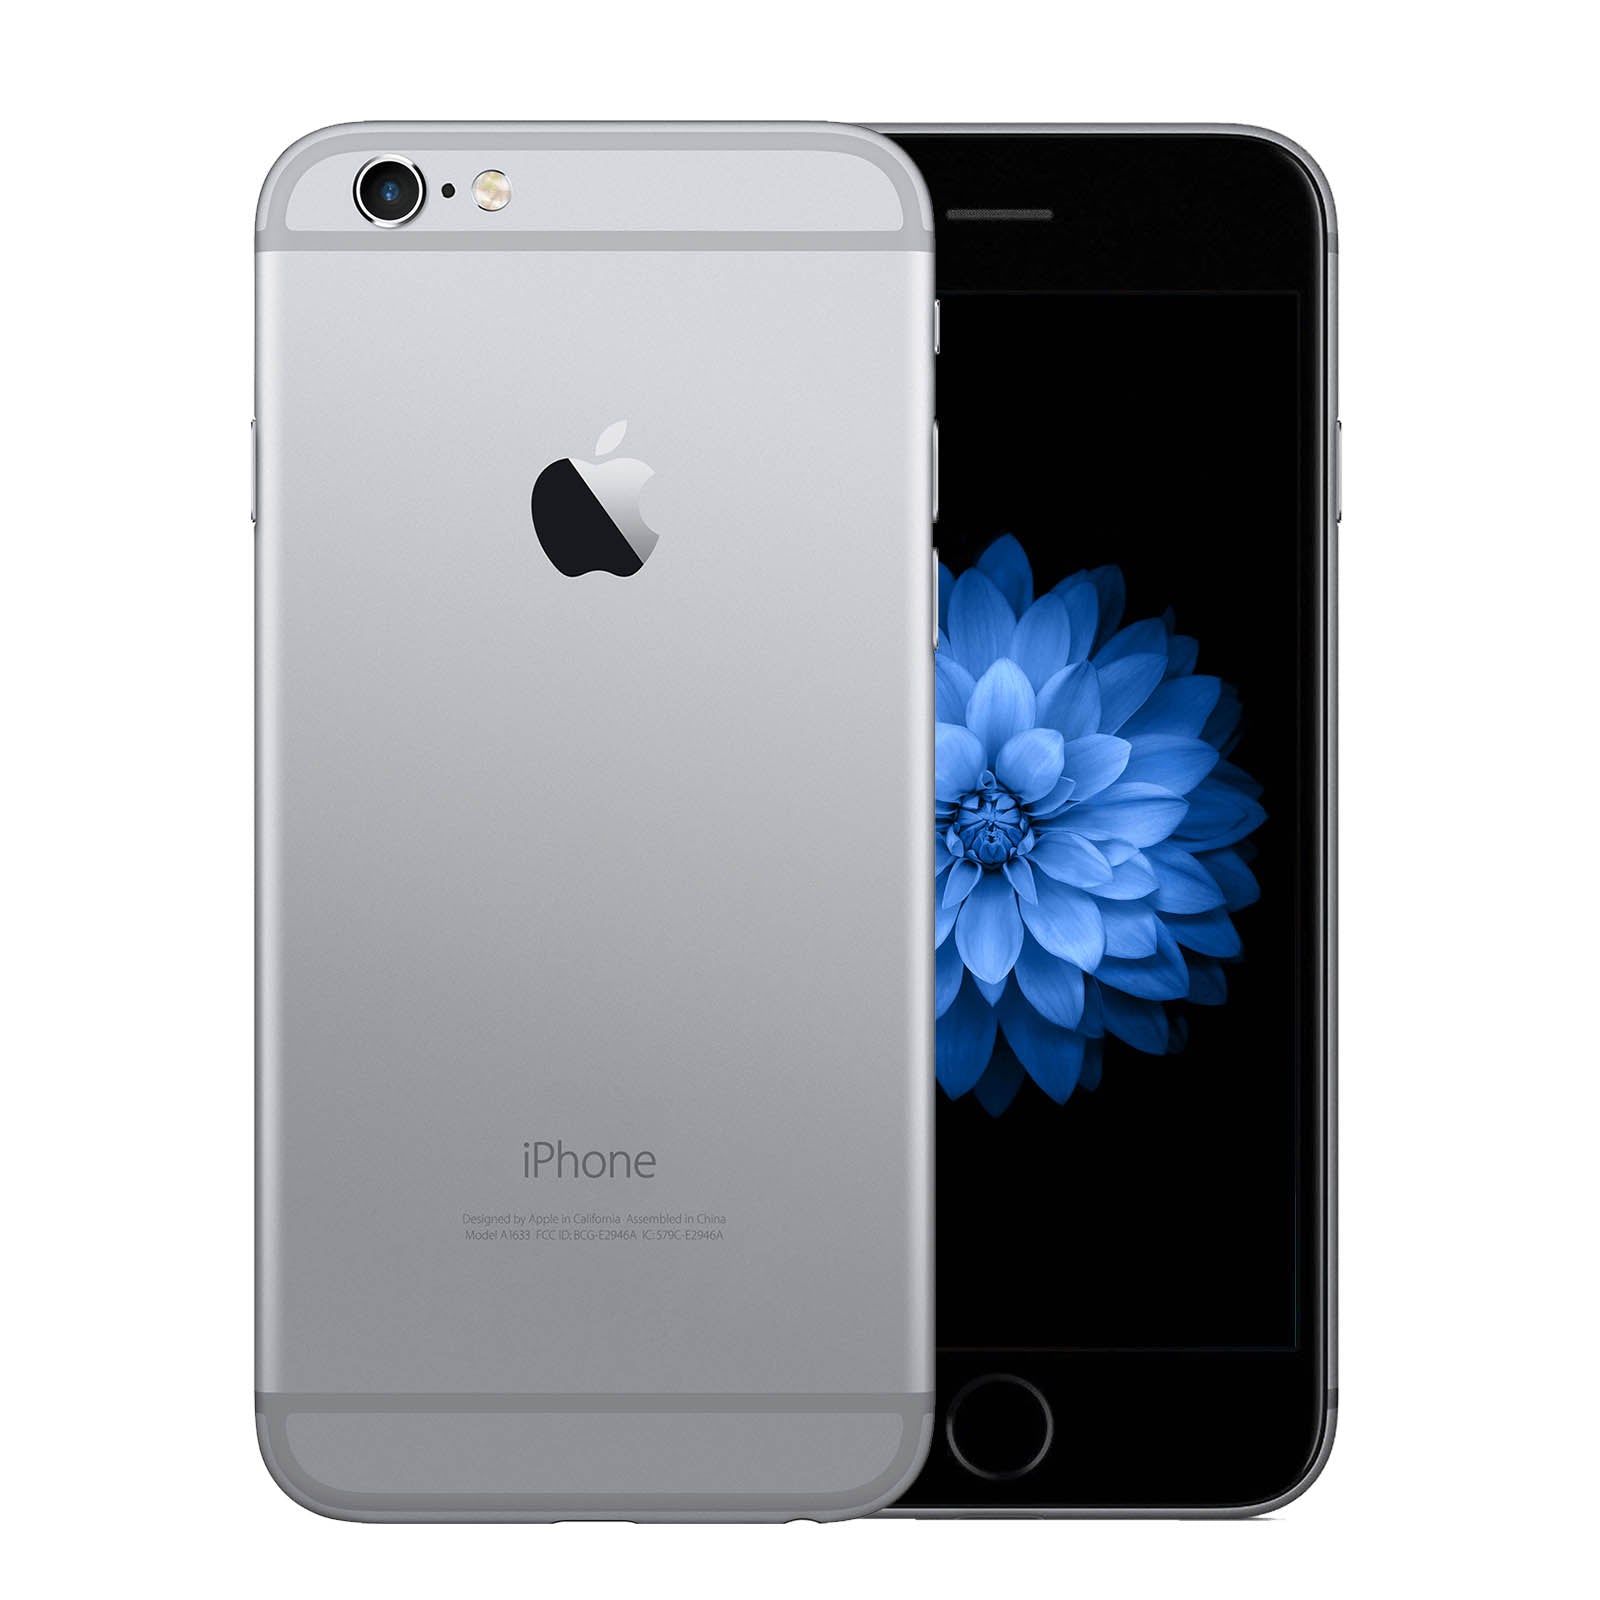 Apple iPhone 6 16GB Space Grey Very Good - Unlocked